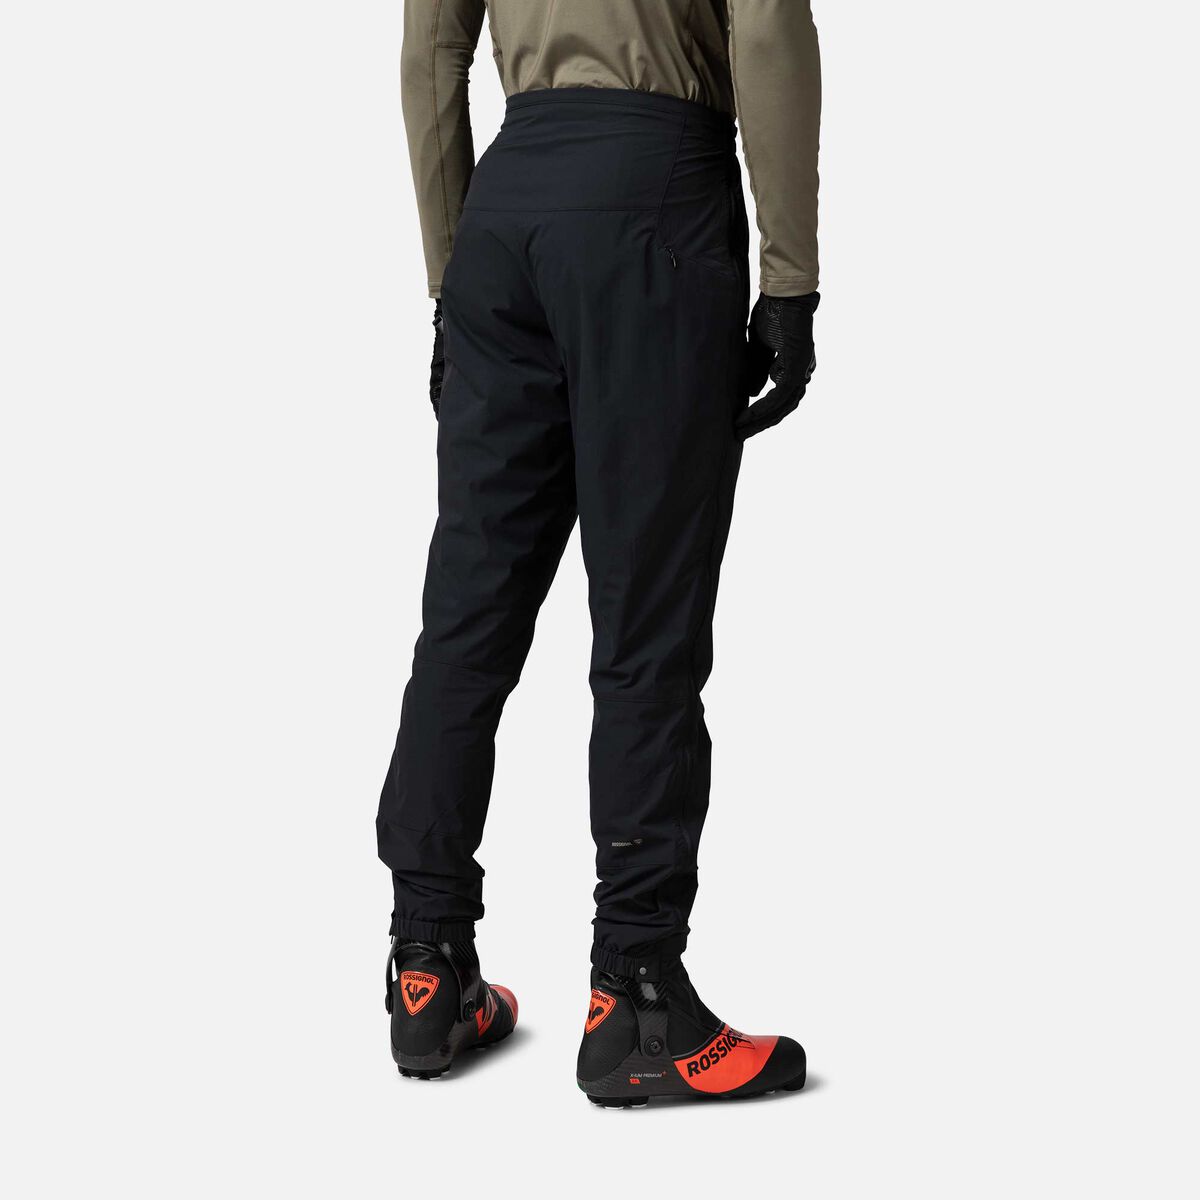 Men's Active Versatile XC Ski Pants